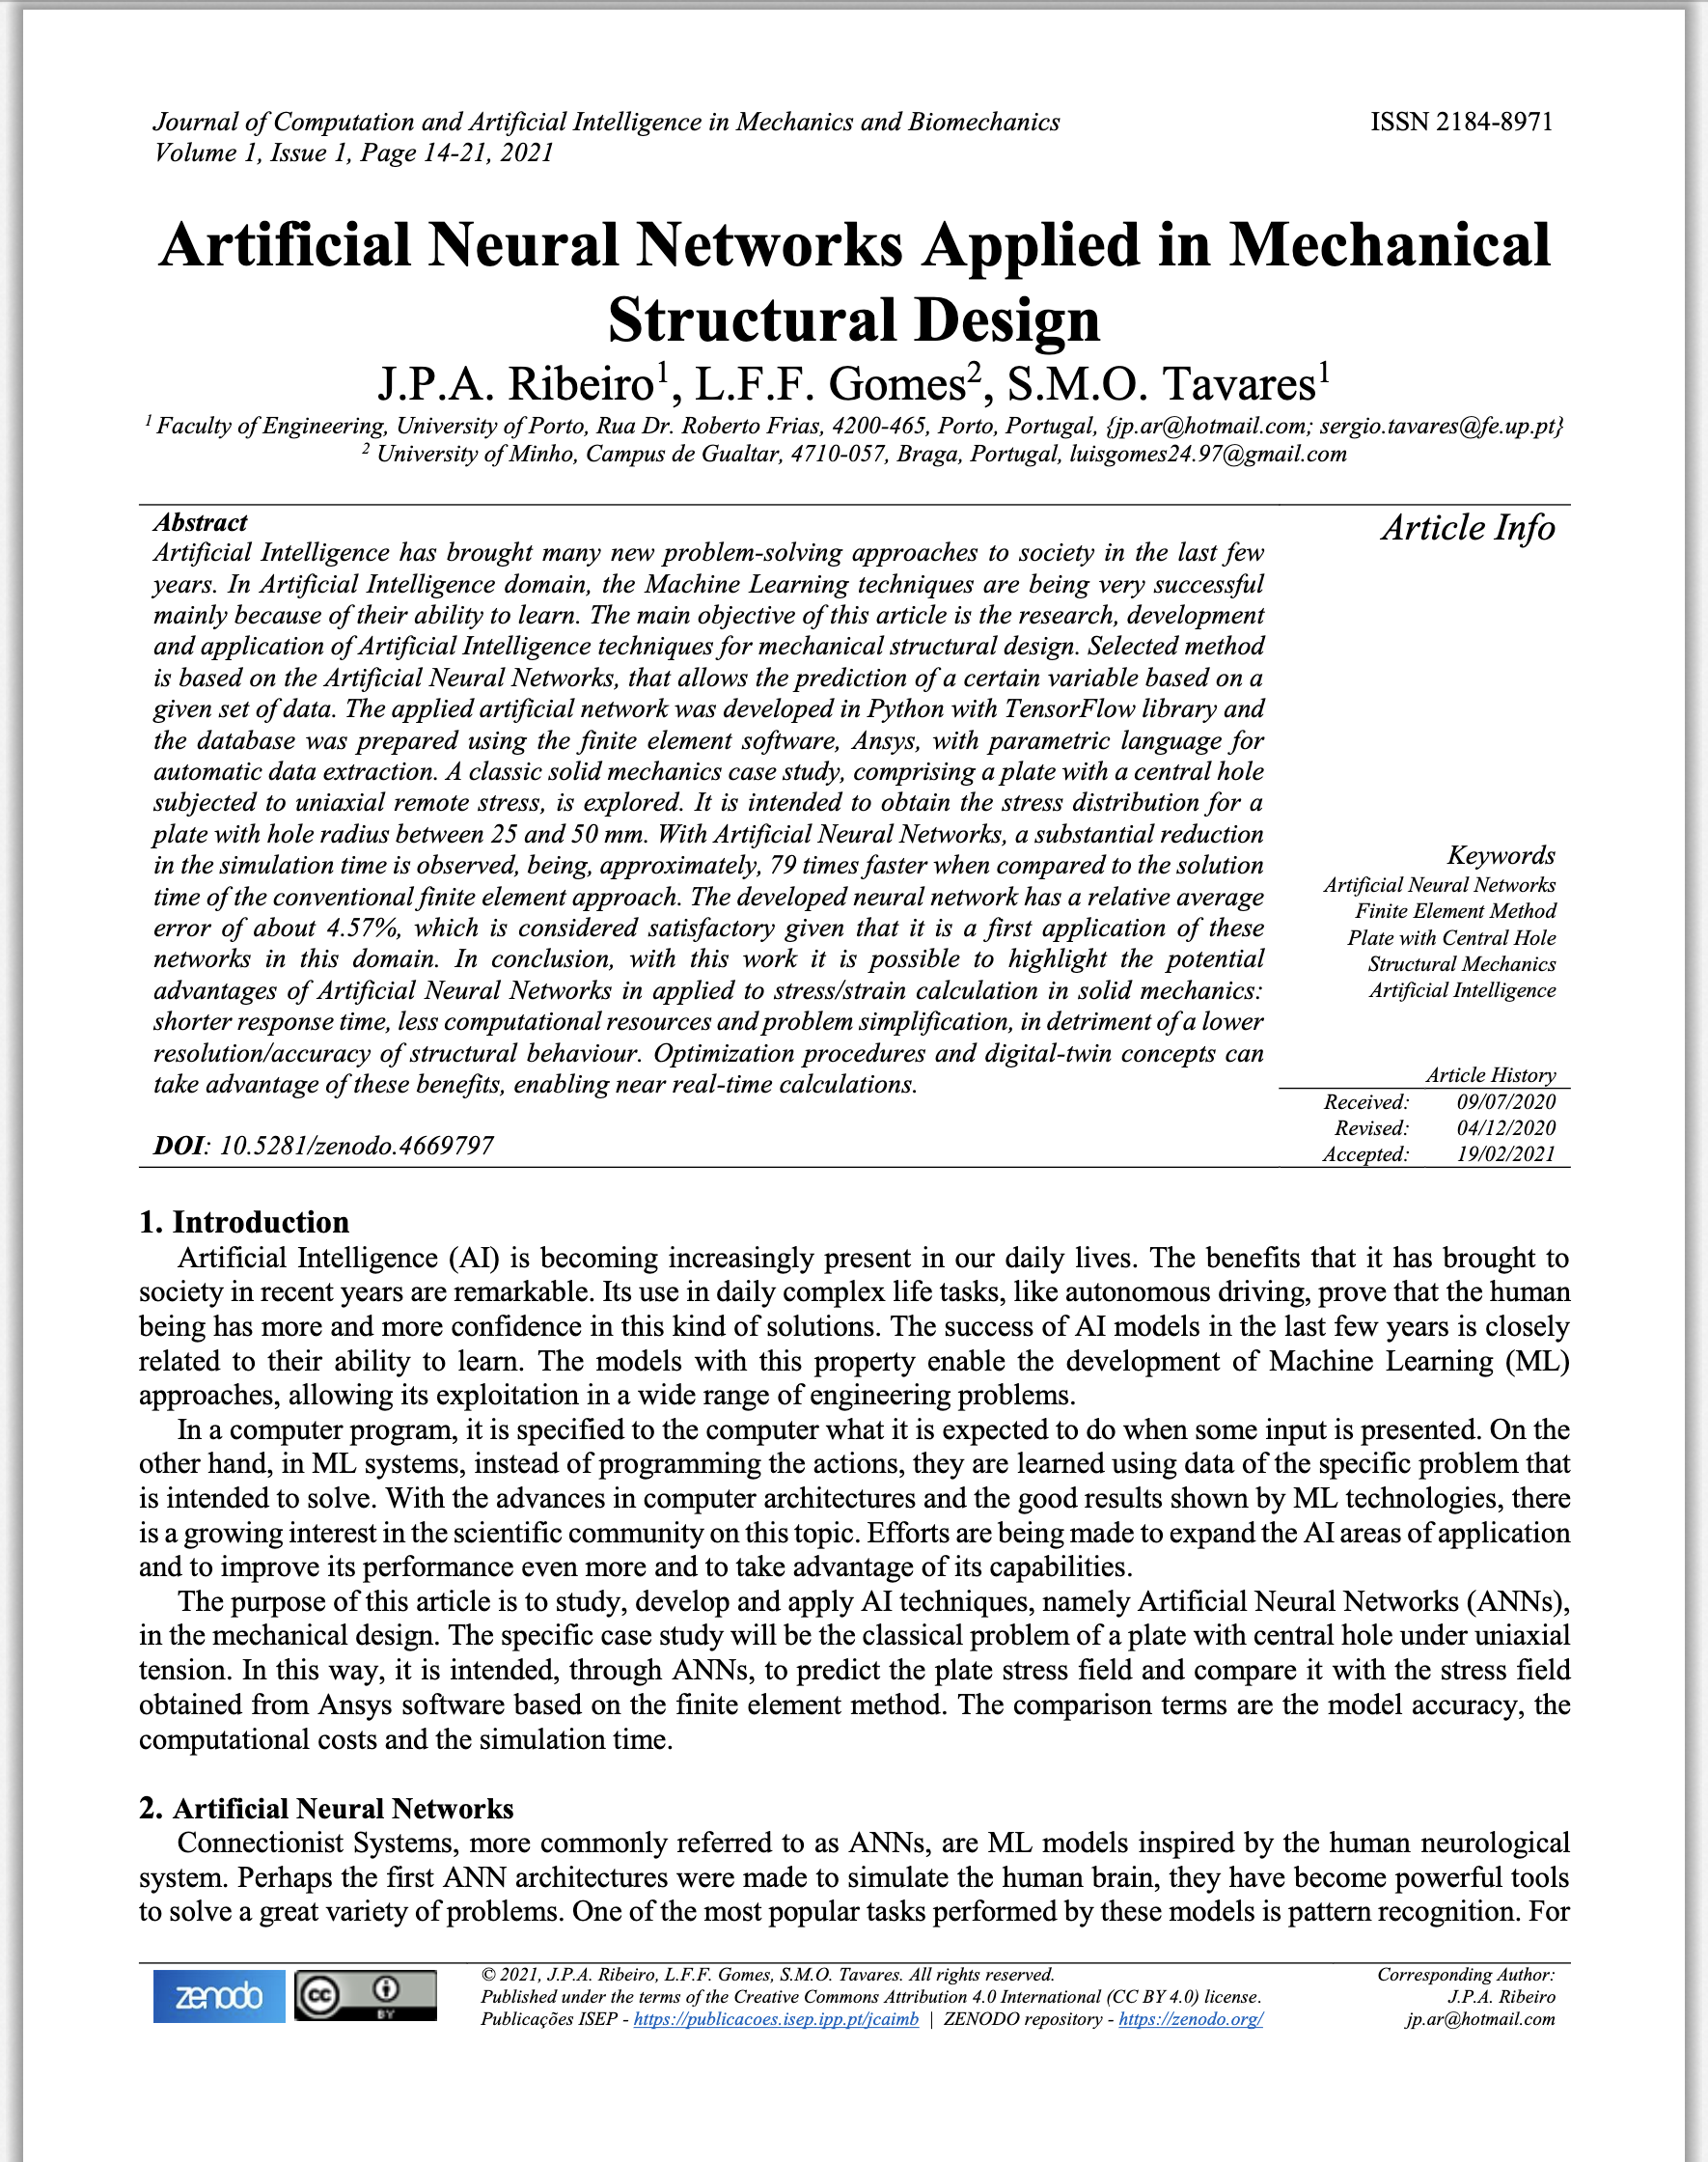 Mechanical Structural Design paper